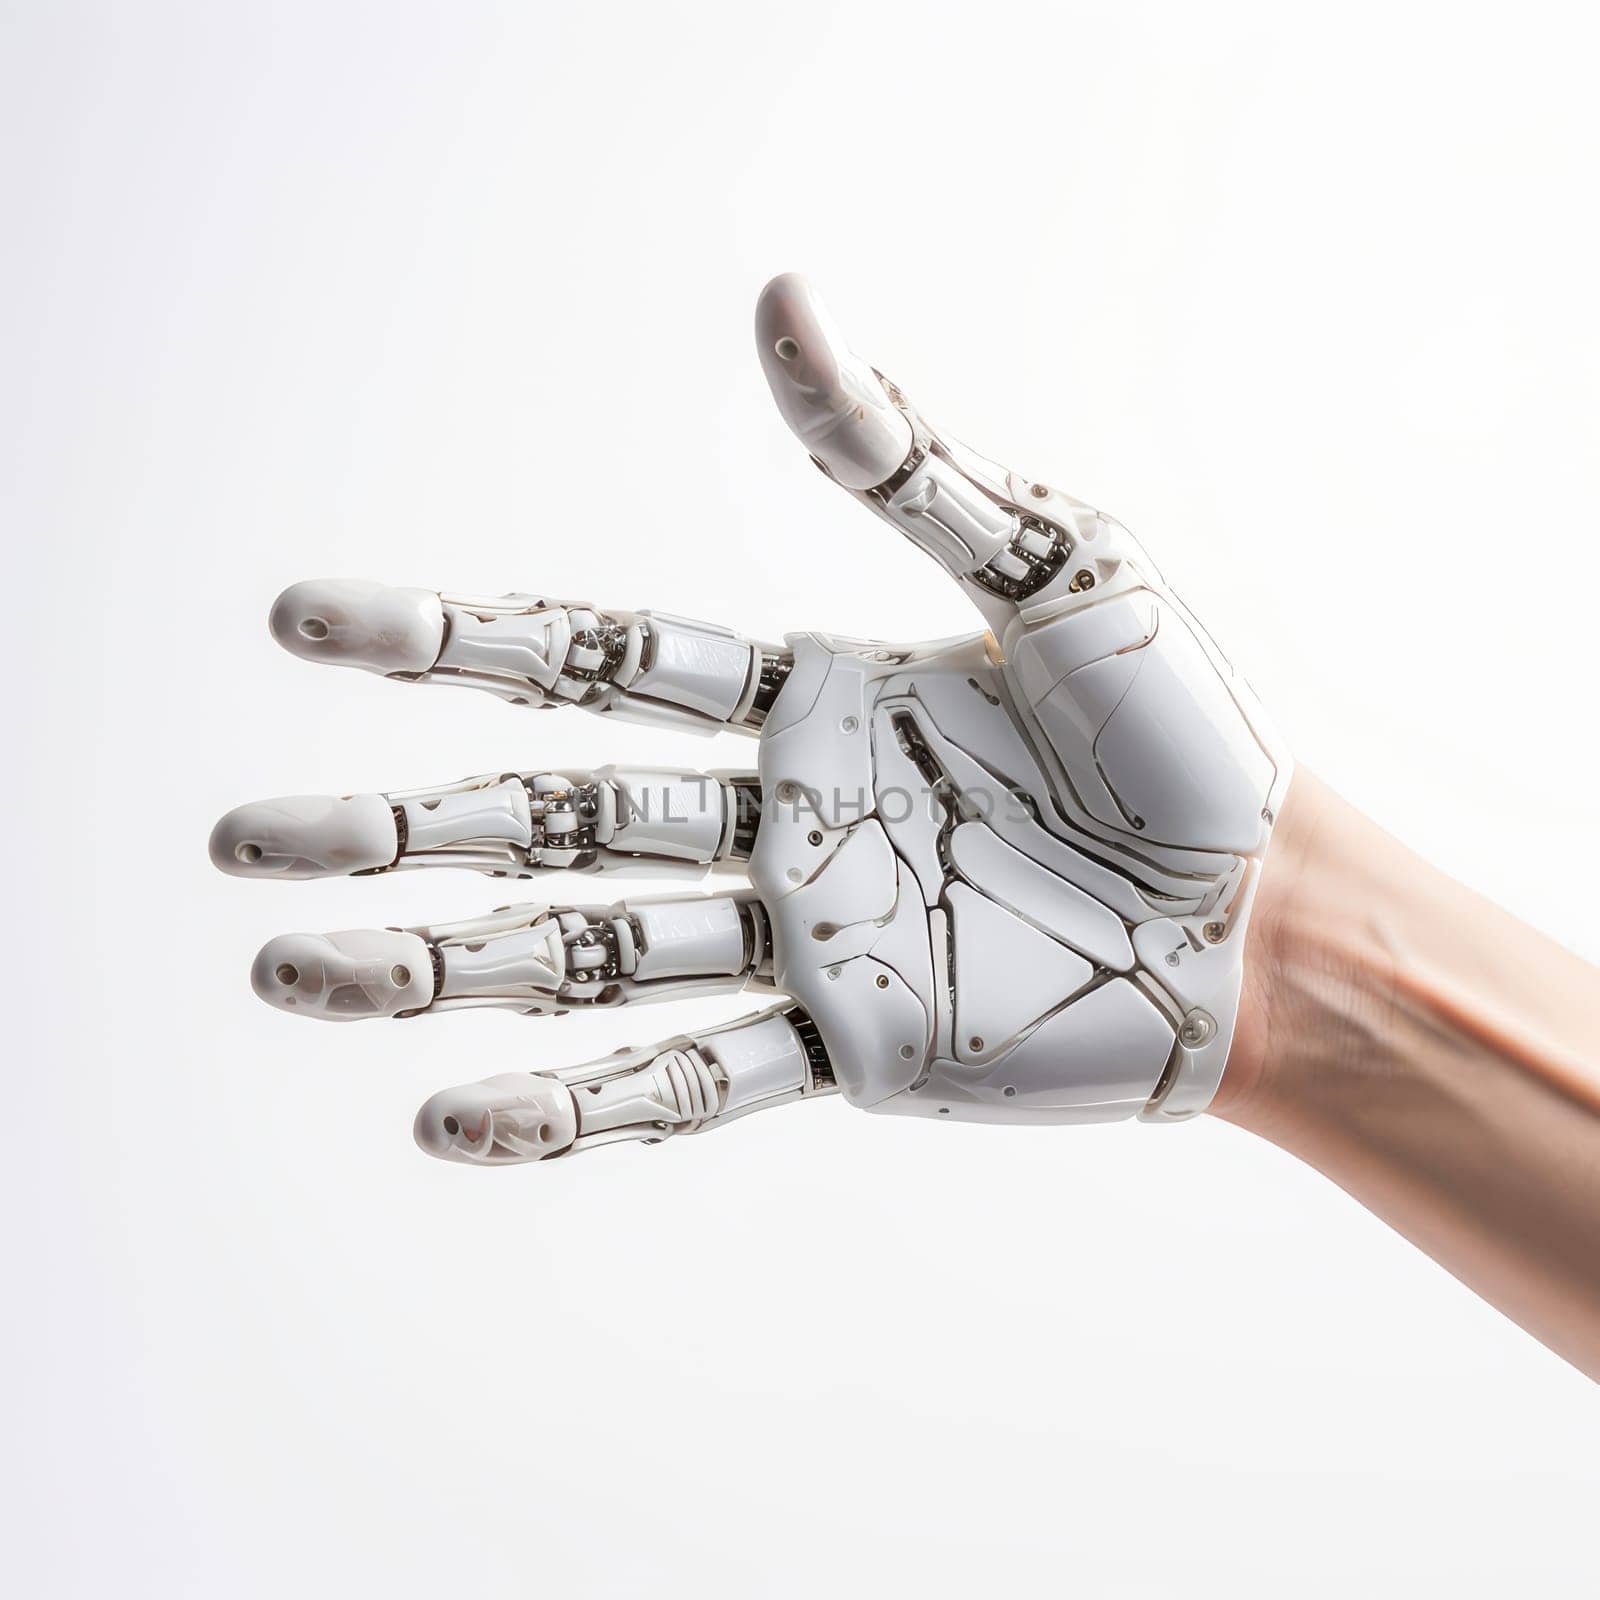 Human robot cyborg hand with artificial intelligence by Alla_Yurtayeva